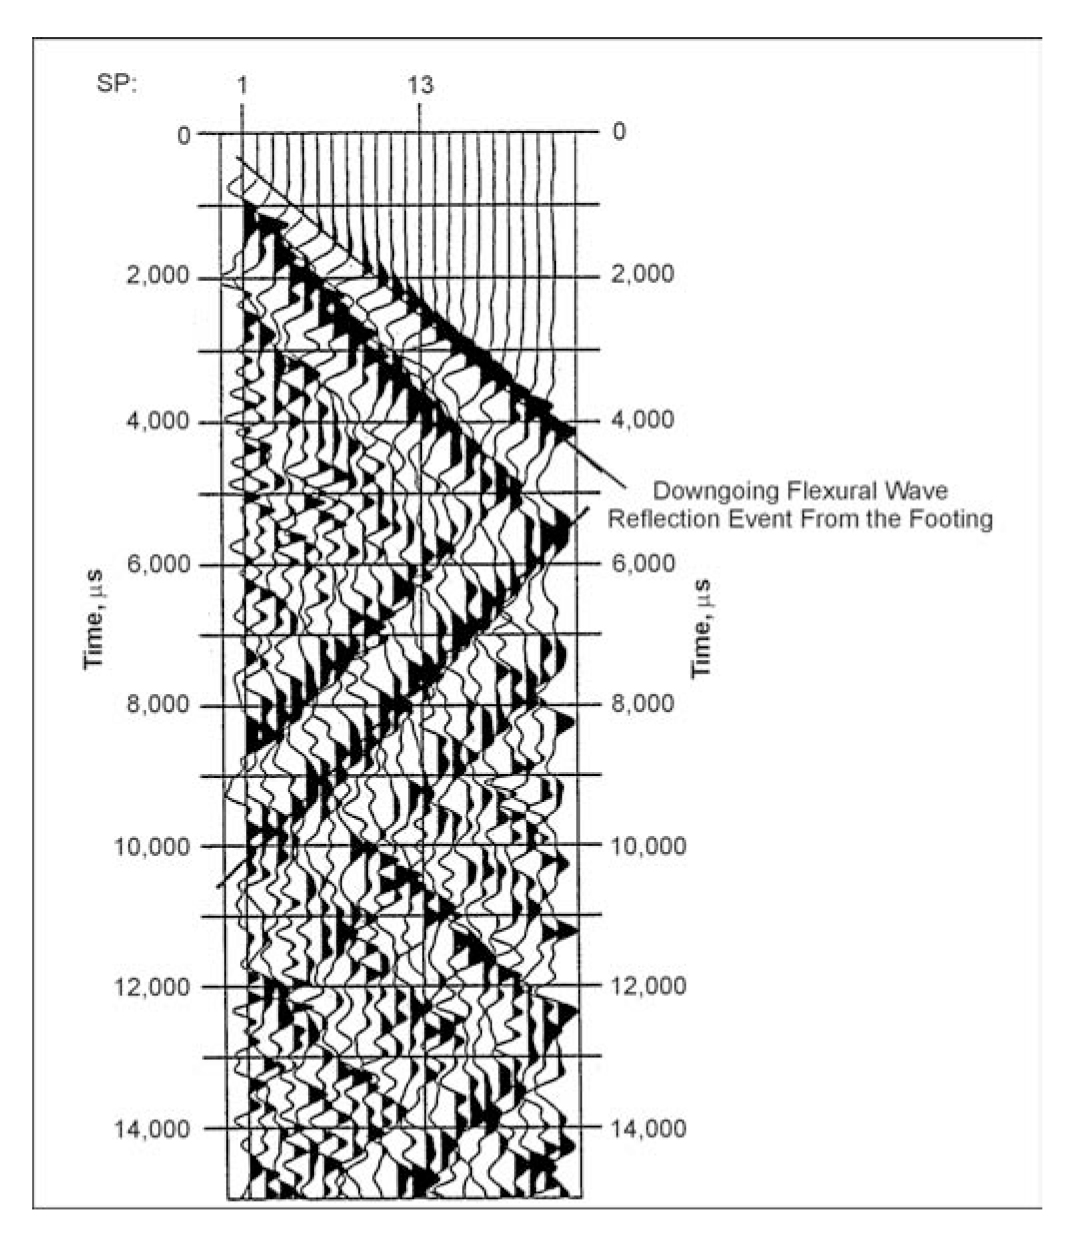 Example Ultraseismic-Vertical Profiling dataset from a bridge pier.